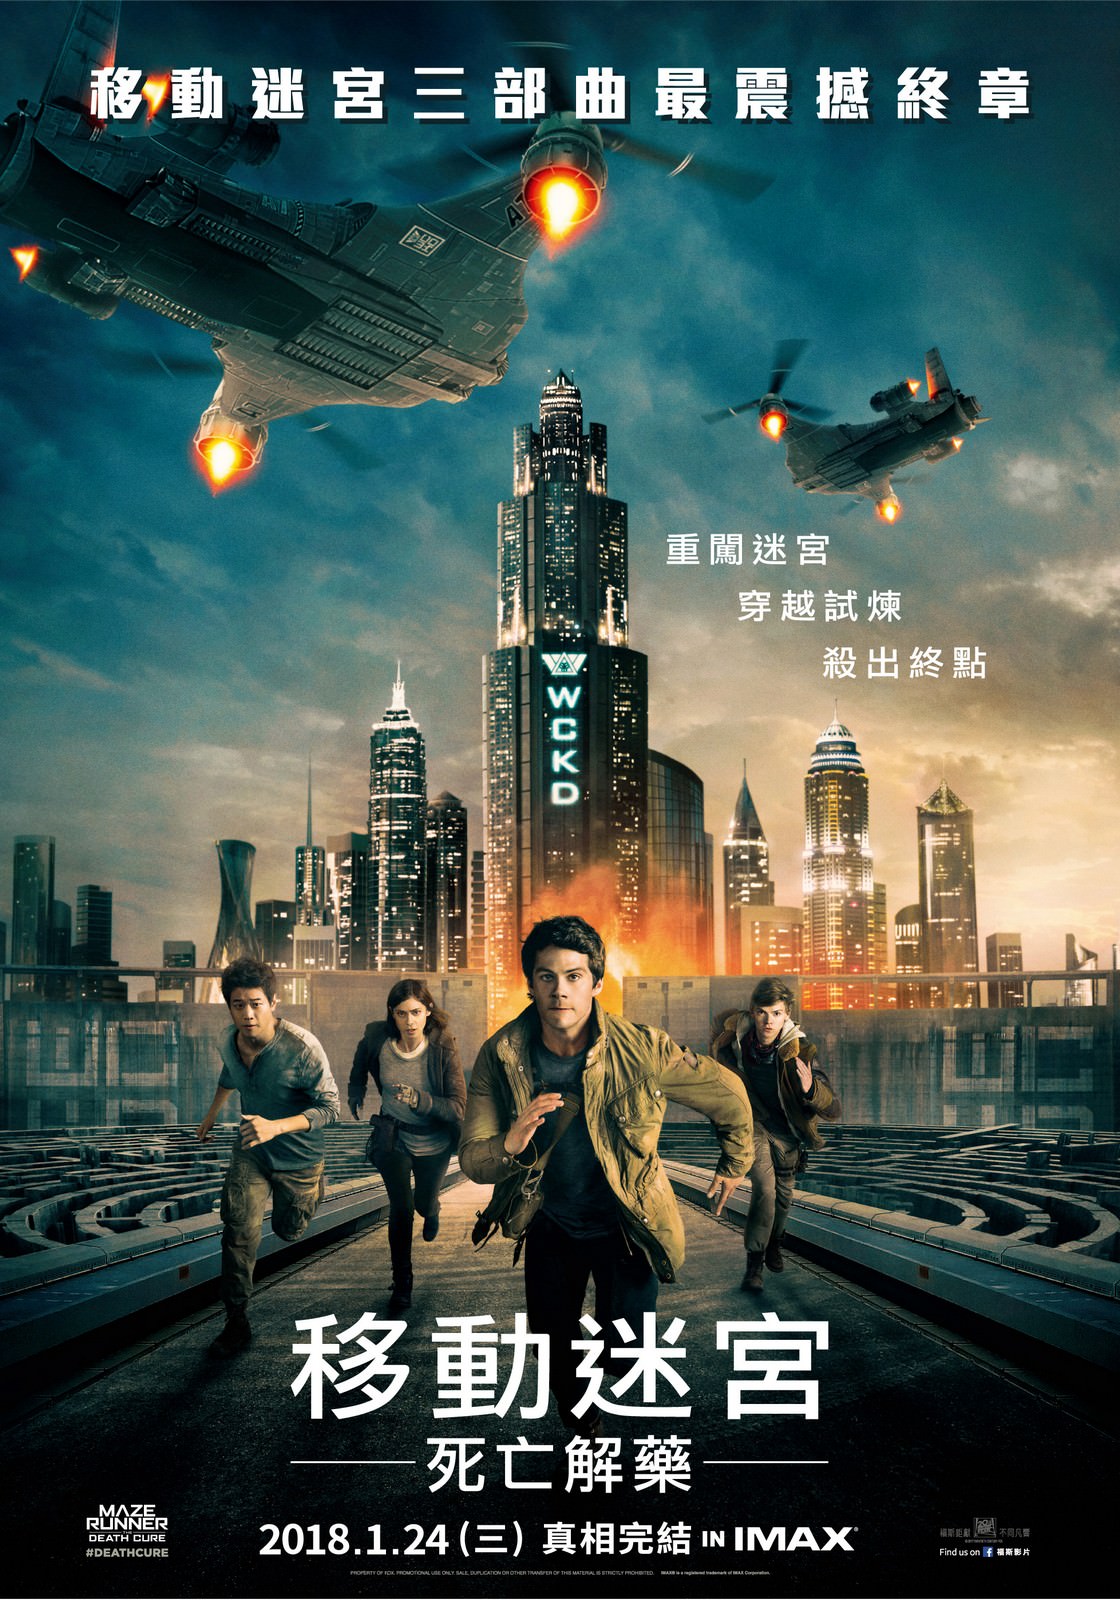 Movie, Maze Runner: The Death Cure(美國, 2018) / 移動迷宮：死亡解藥(台灣.香港) / 移动迷宫3：死亡解药(中國), 電影海報, 台灣